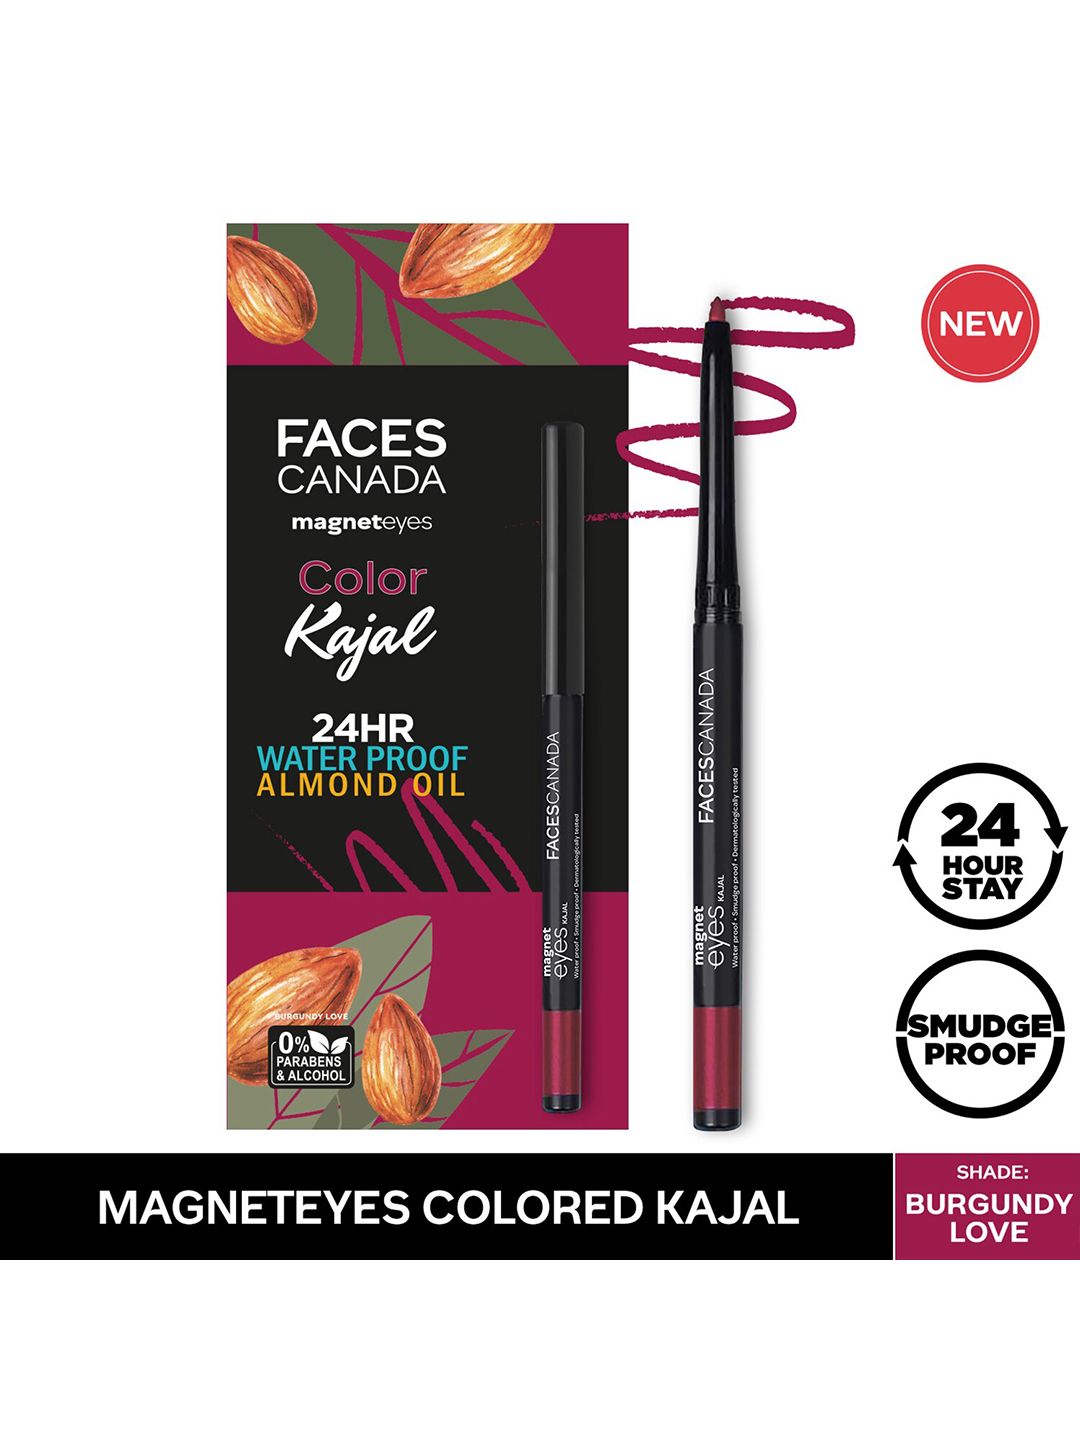 FACES CANADA Magneteyes Waterproof Color Kajal - Burgundy Love 04 Price in India